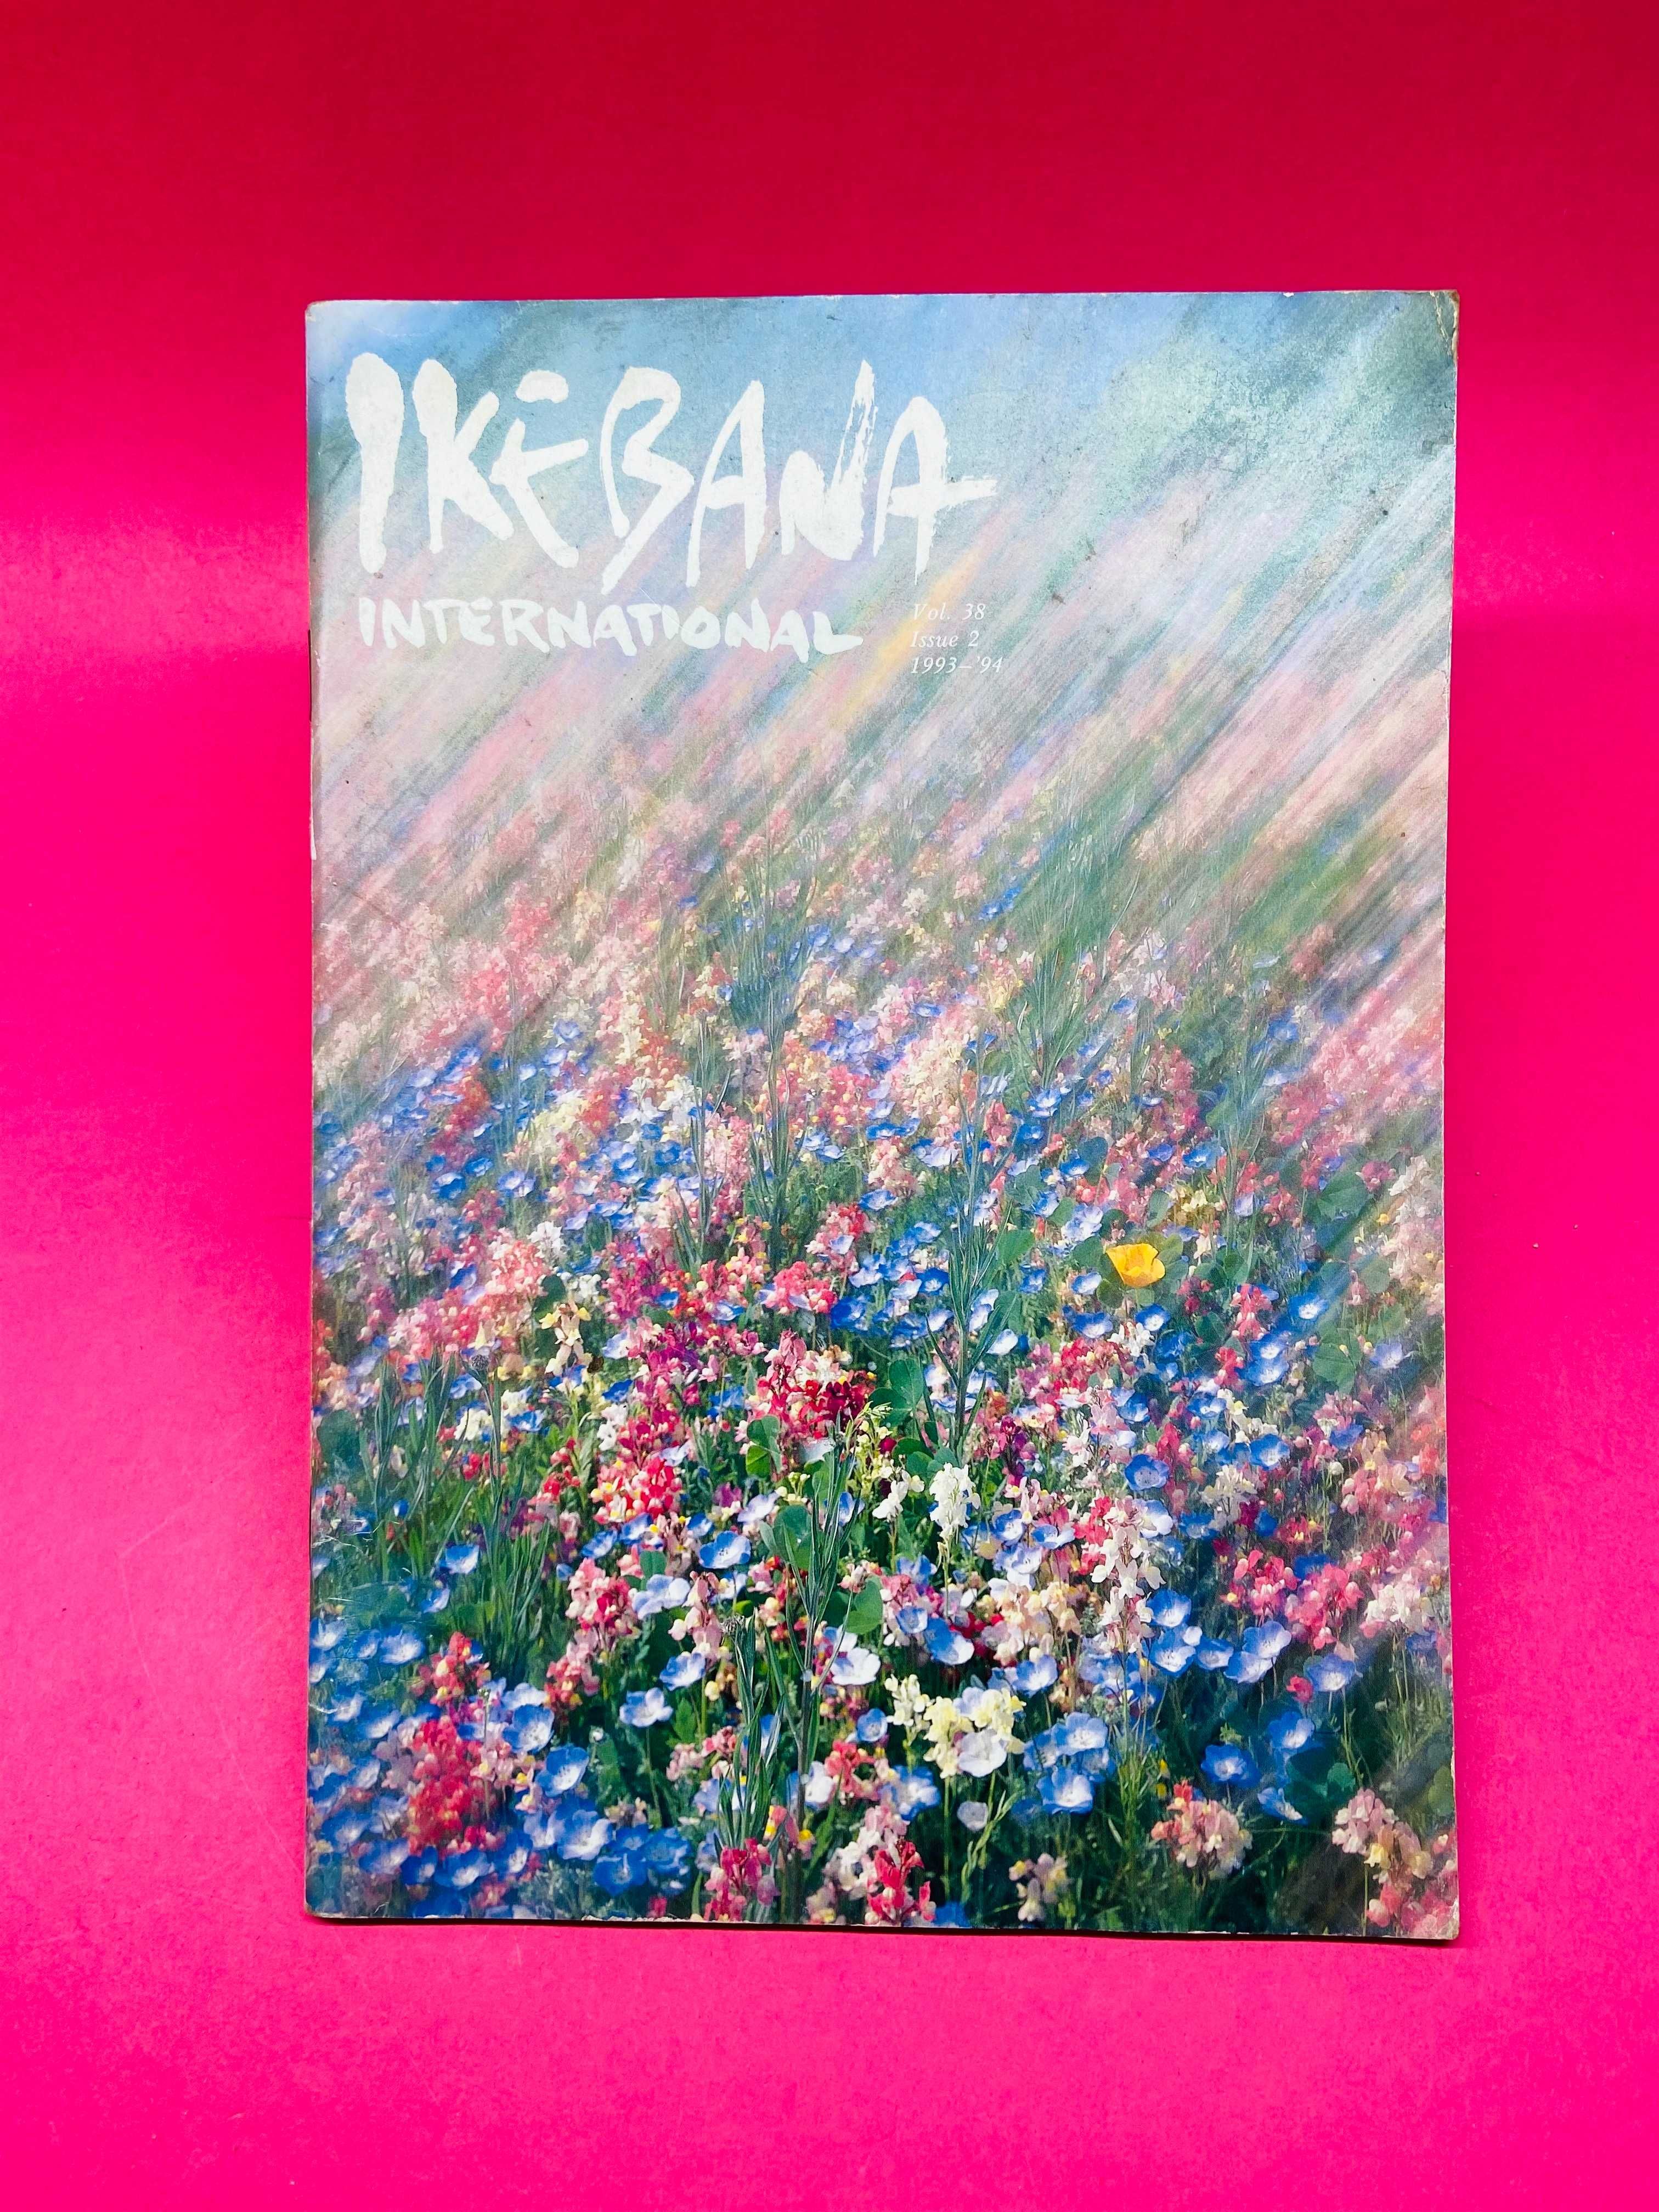 Revista Ikebana Internacional Vol. 38, Issue 2, 1993/1994